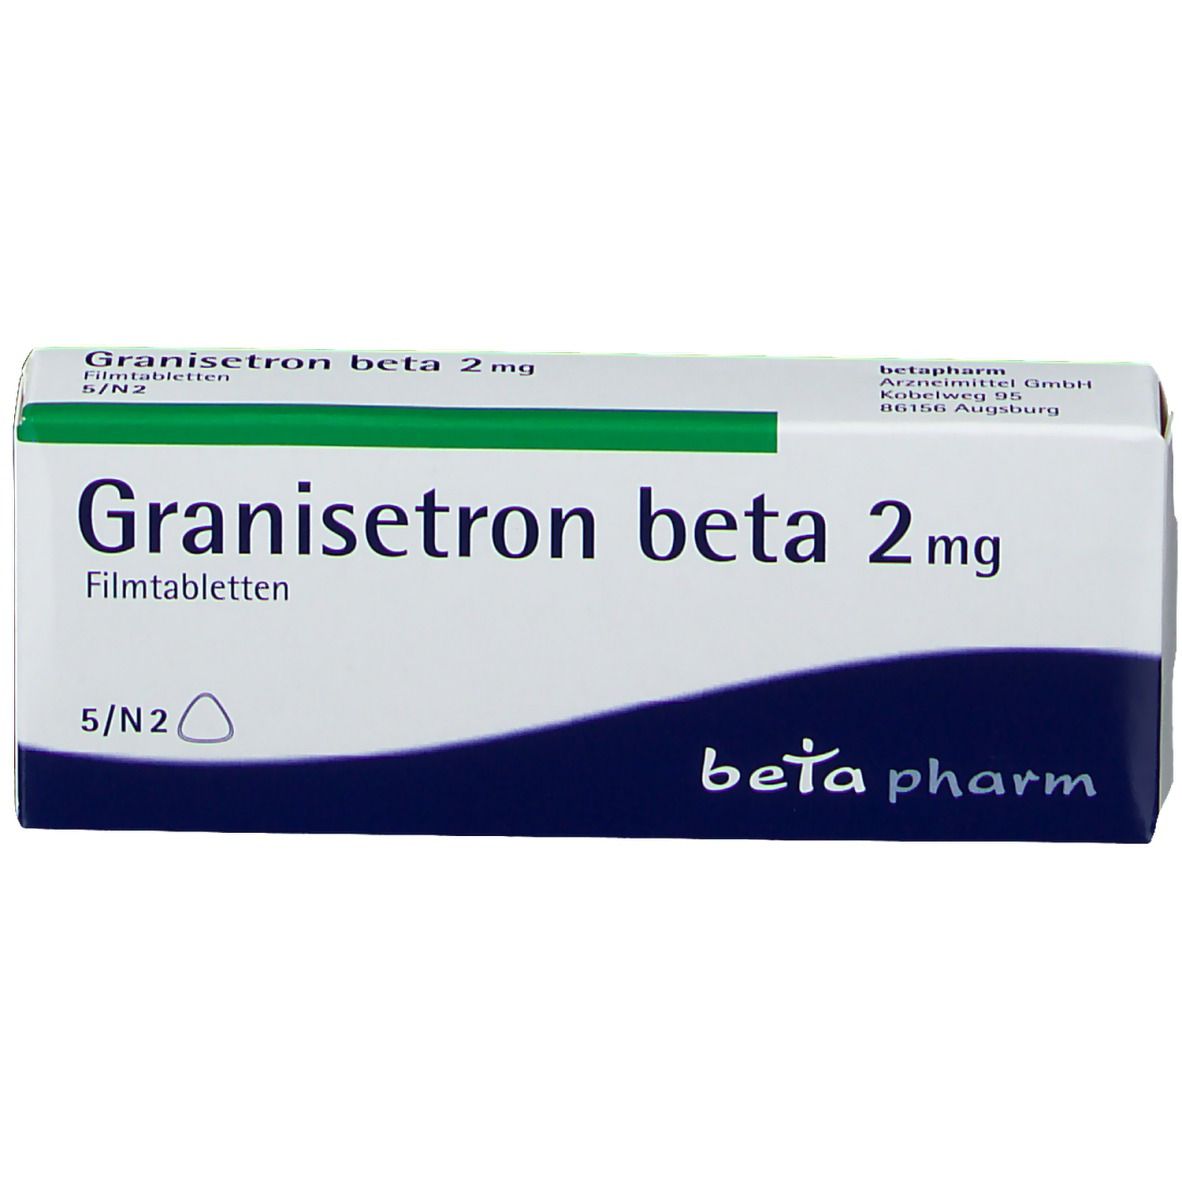 Granisetron beta 2 mg